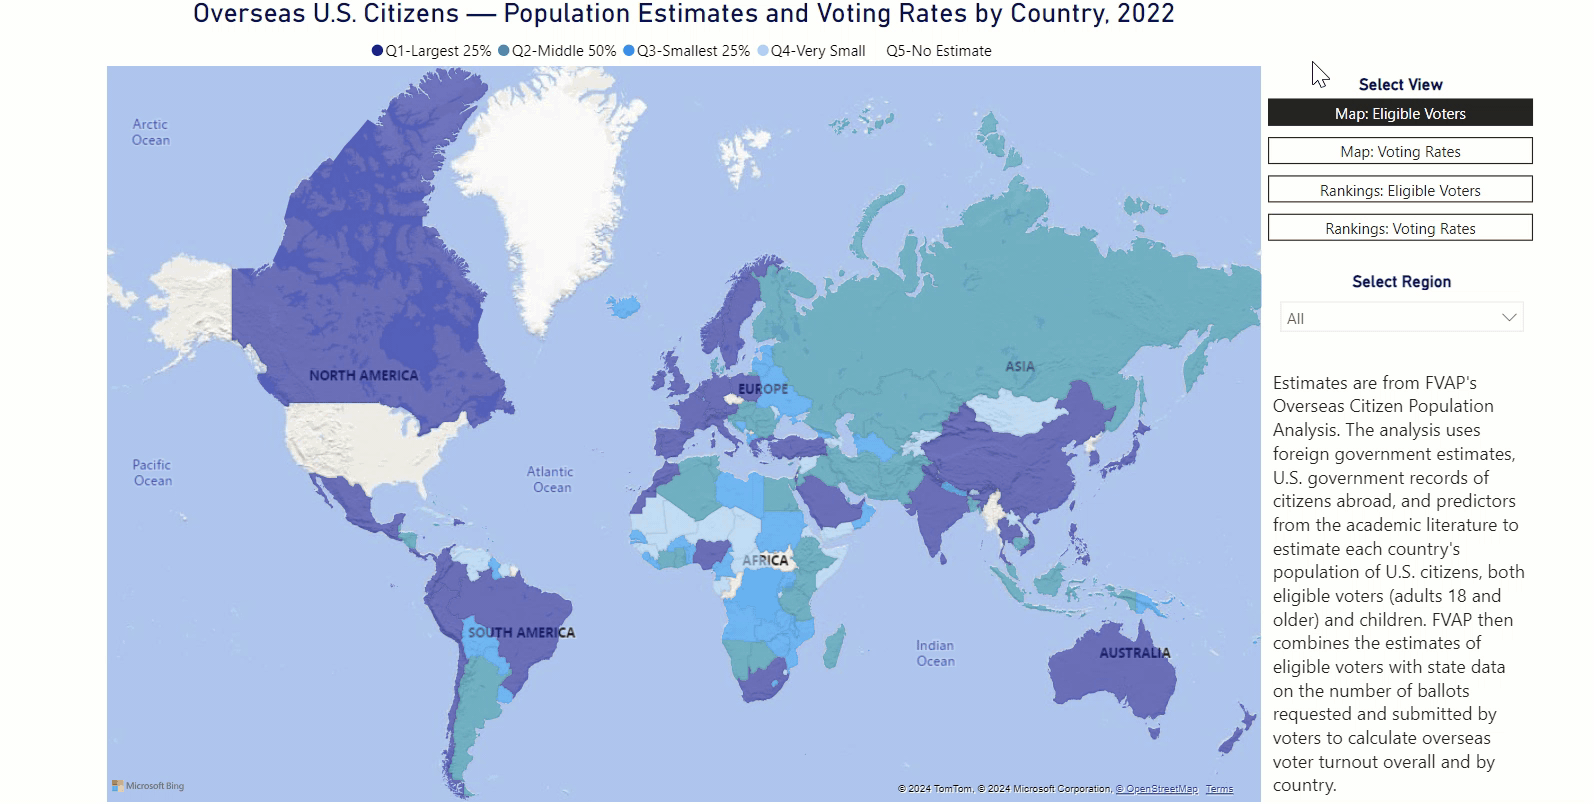 Image ?	Overseas U.S. Citizens - Population Estimates and Voting Rates